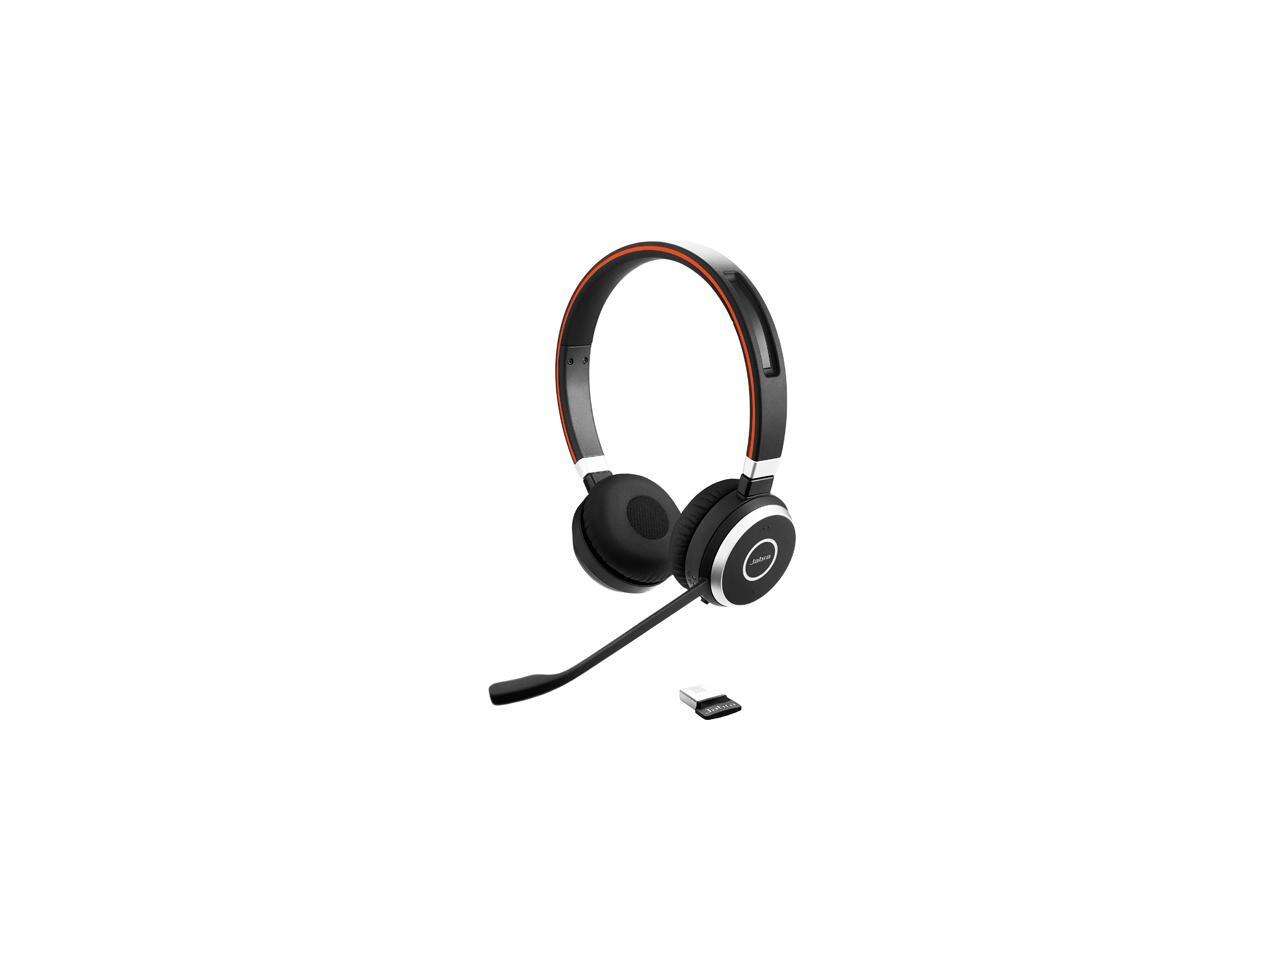 Jabra Evolve 65 UC Stereo Wireless Headset / Music Headphones